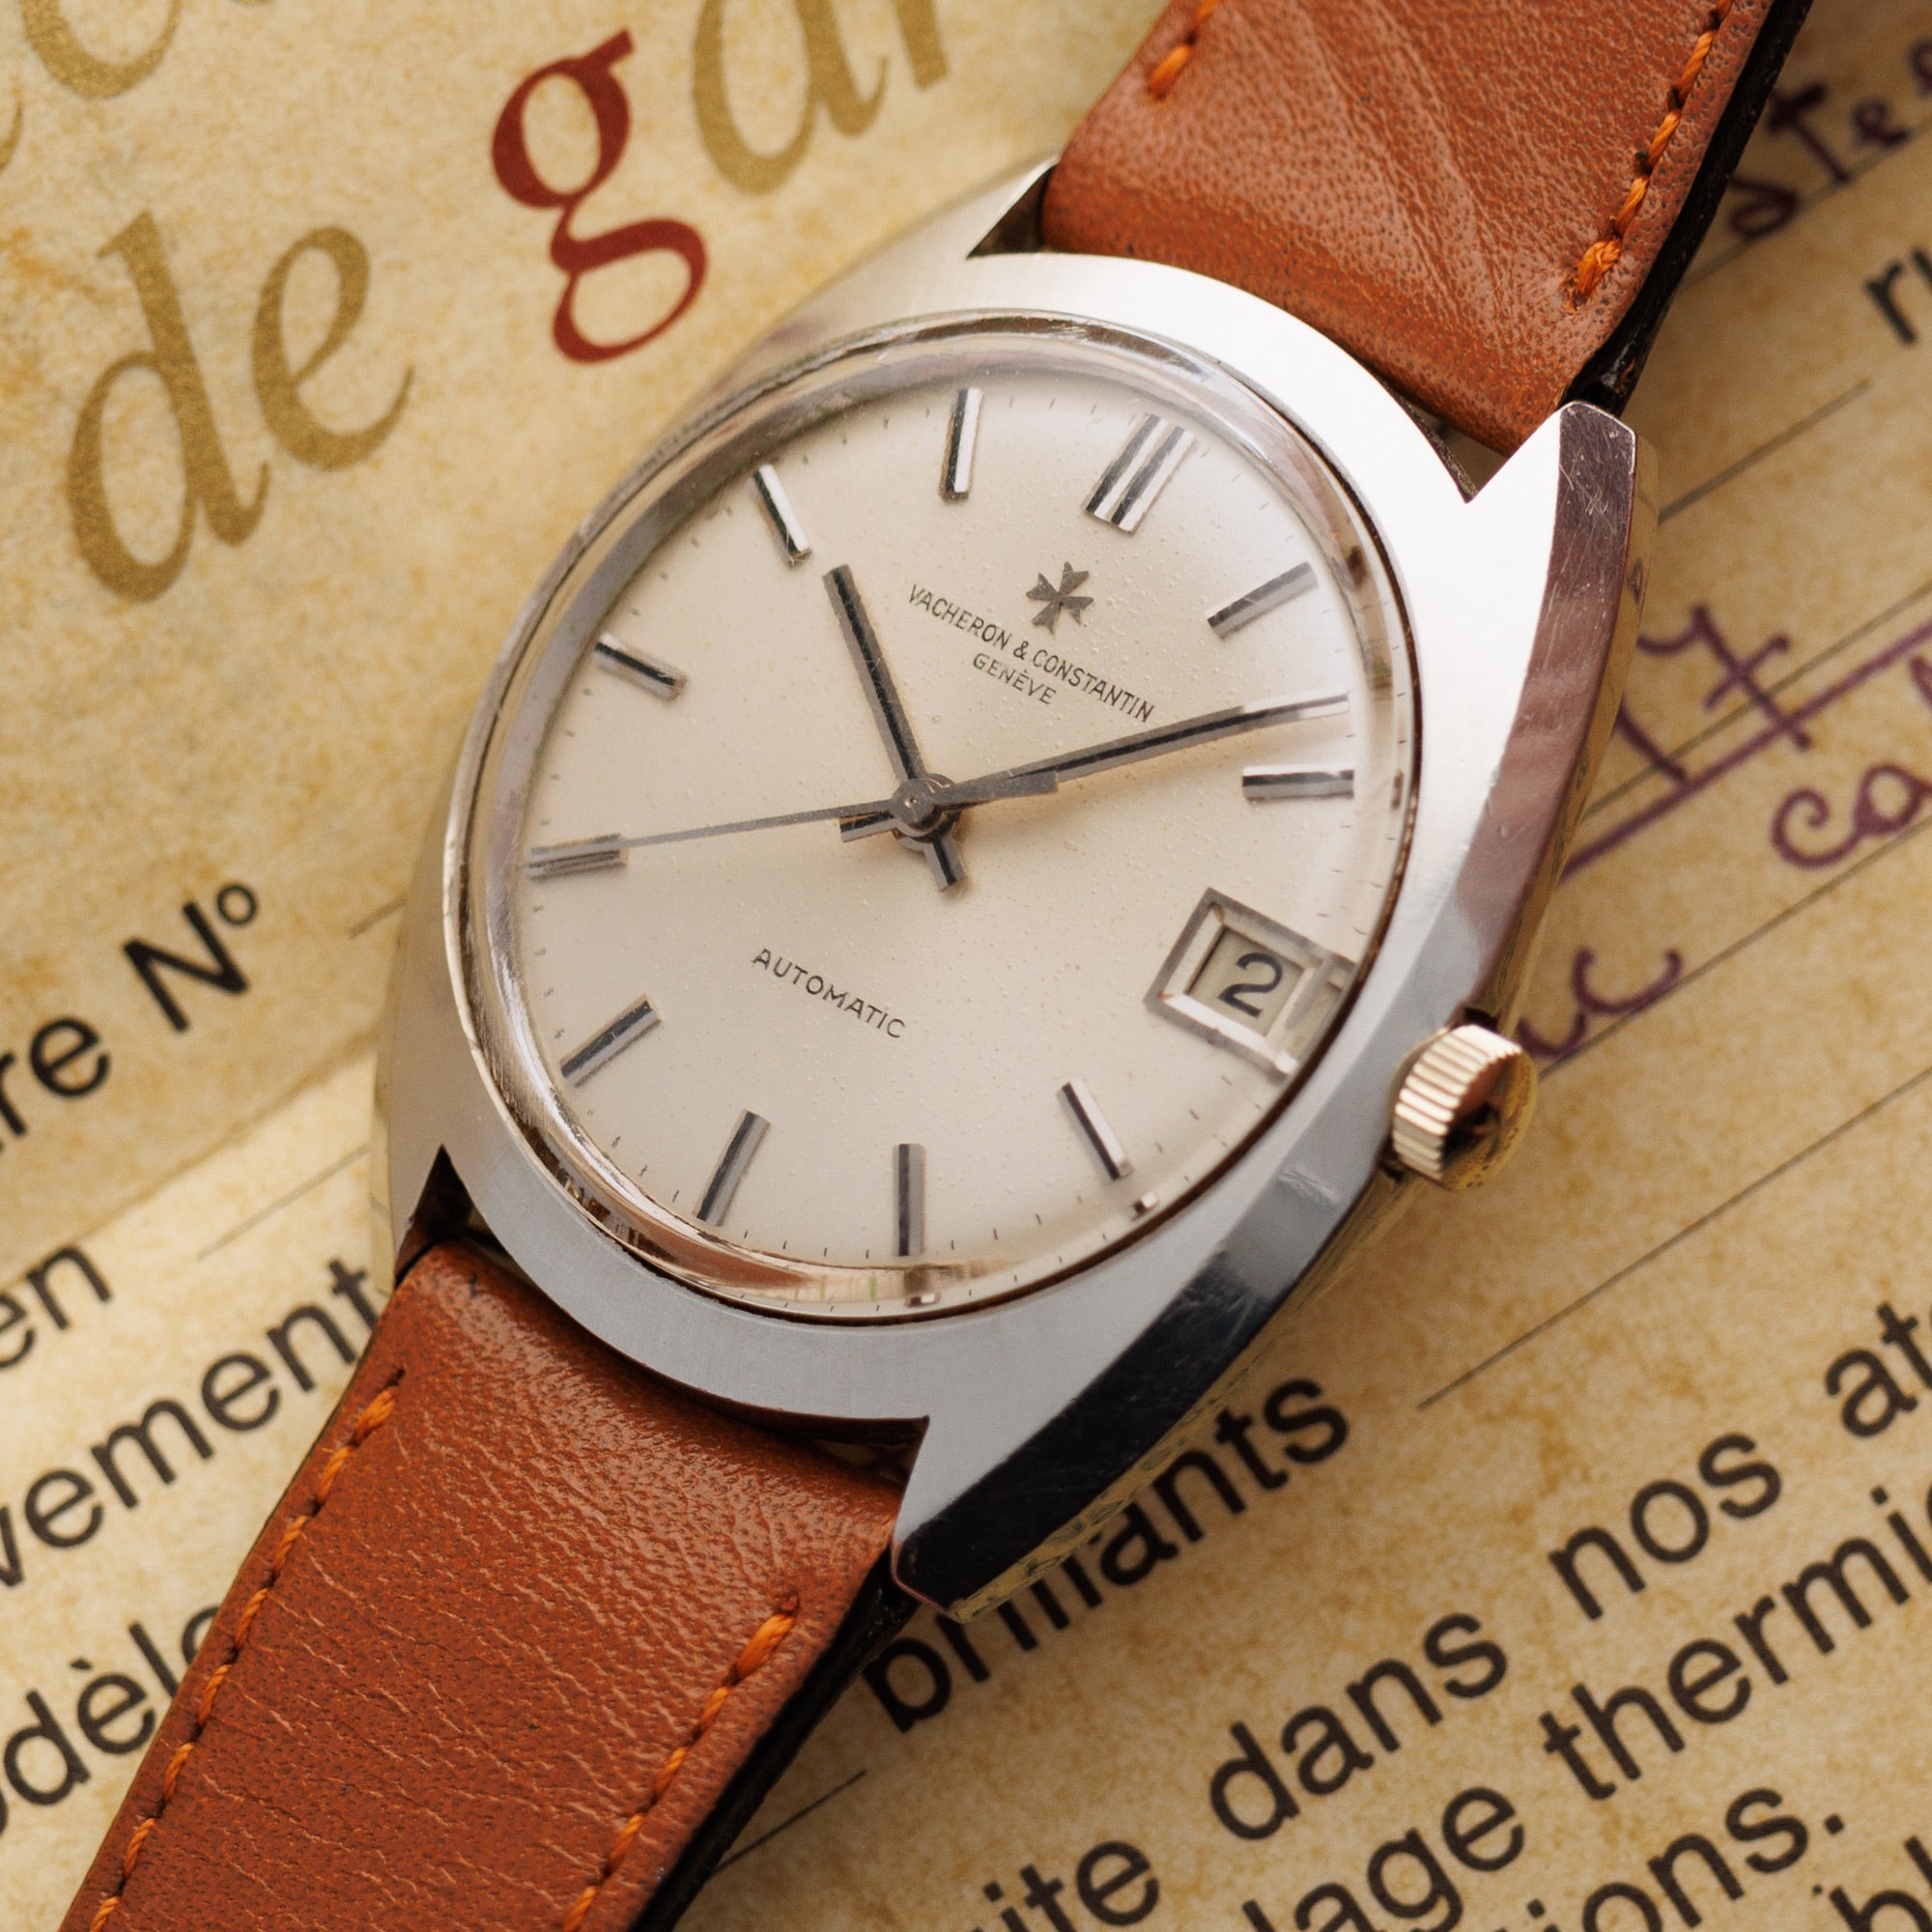 Vacheron Constantin - Vacheron Constantin Steel Watch Ref. 7397 - The Keystone Watches